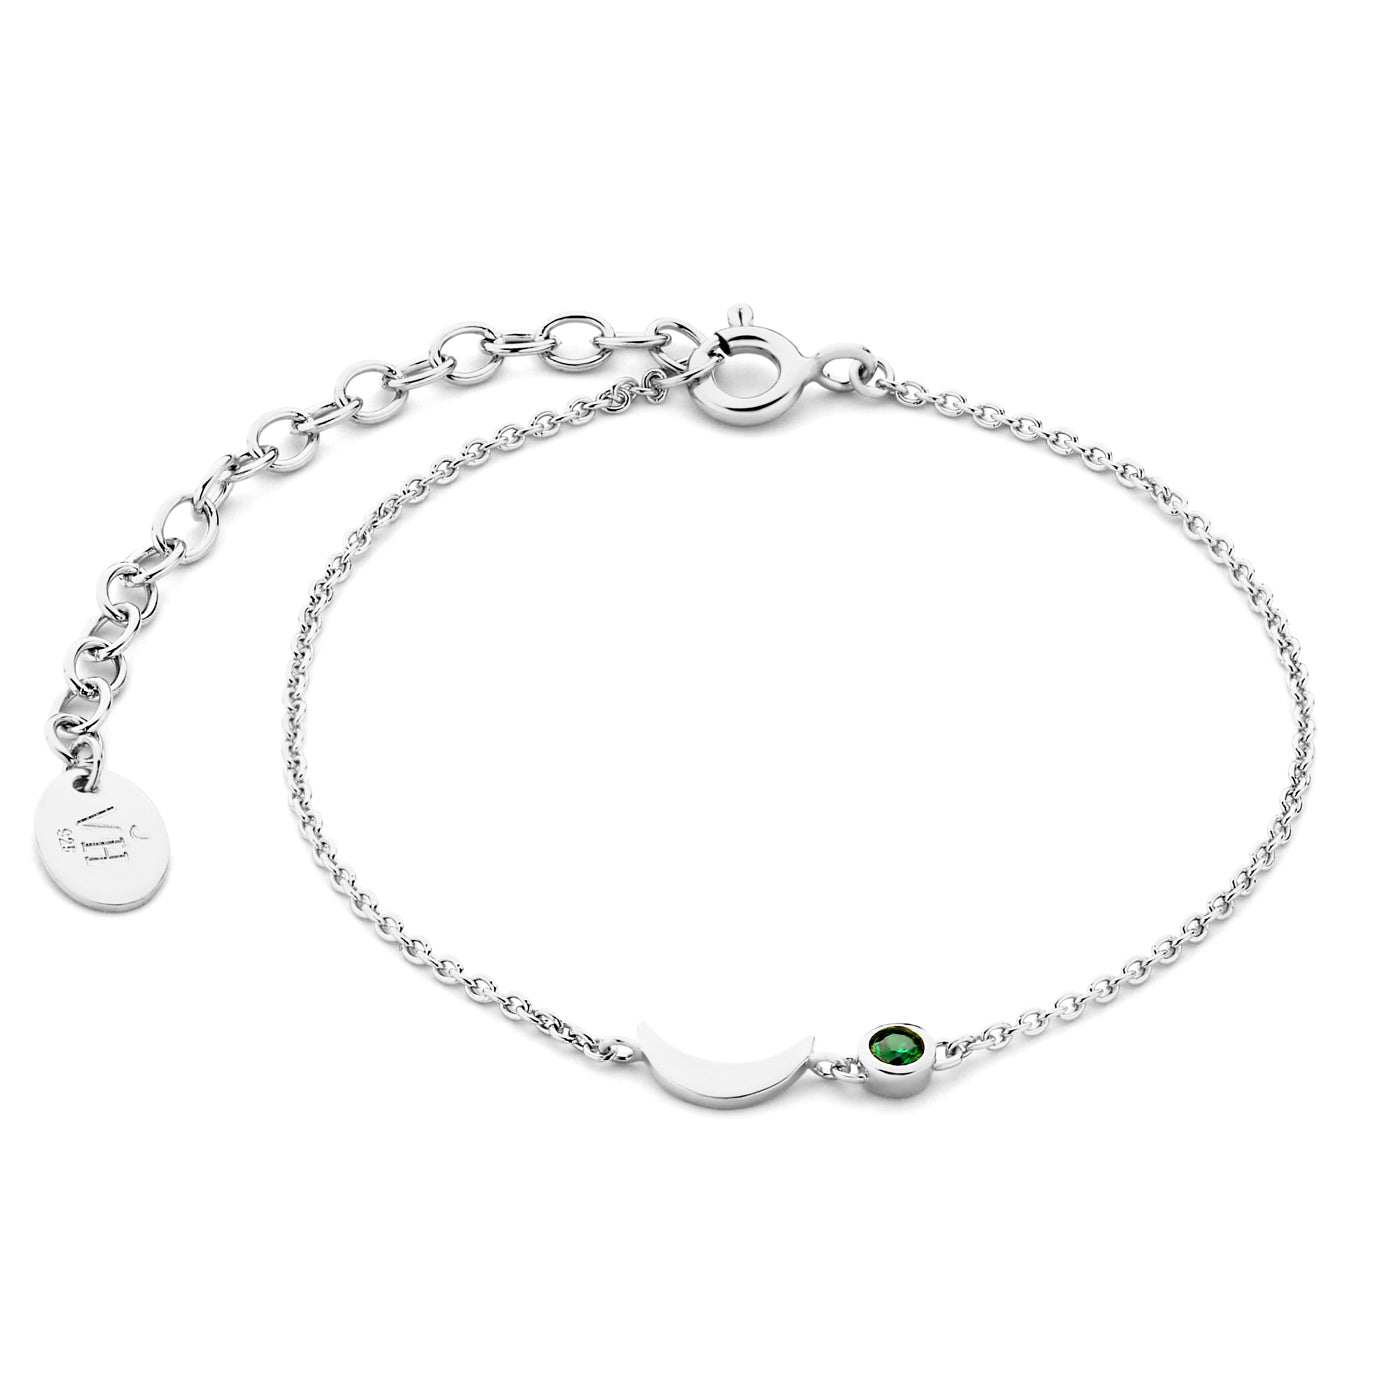 Luna 925 sterling silver bracelet with green zirconia stone